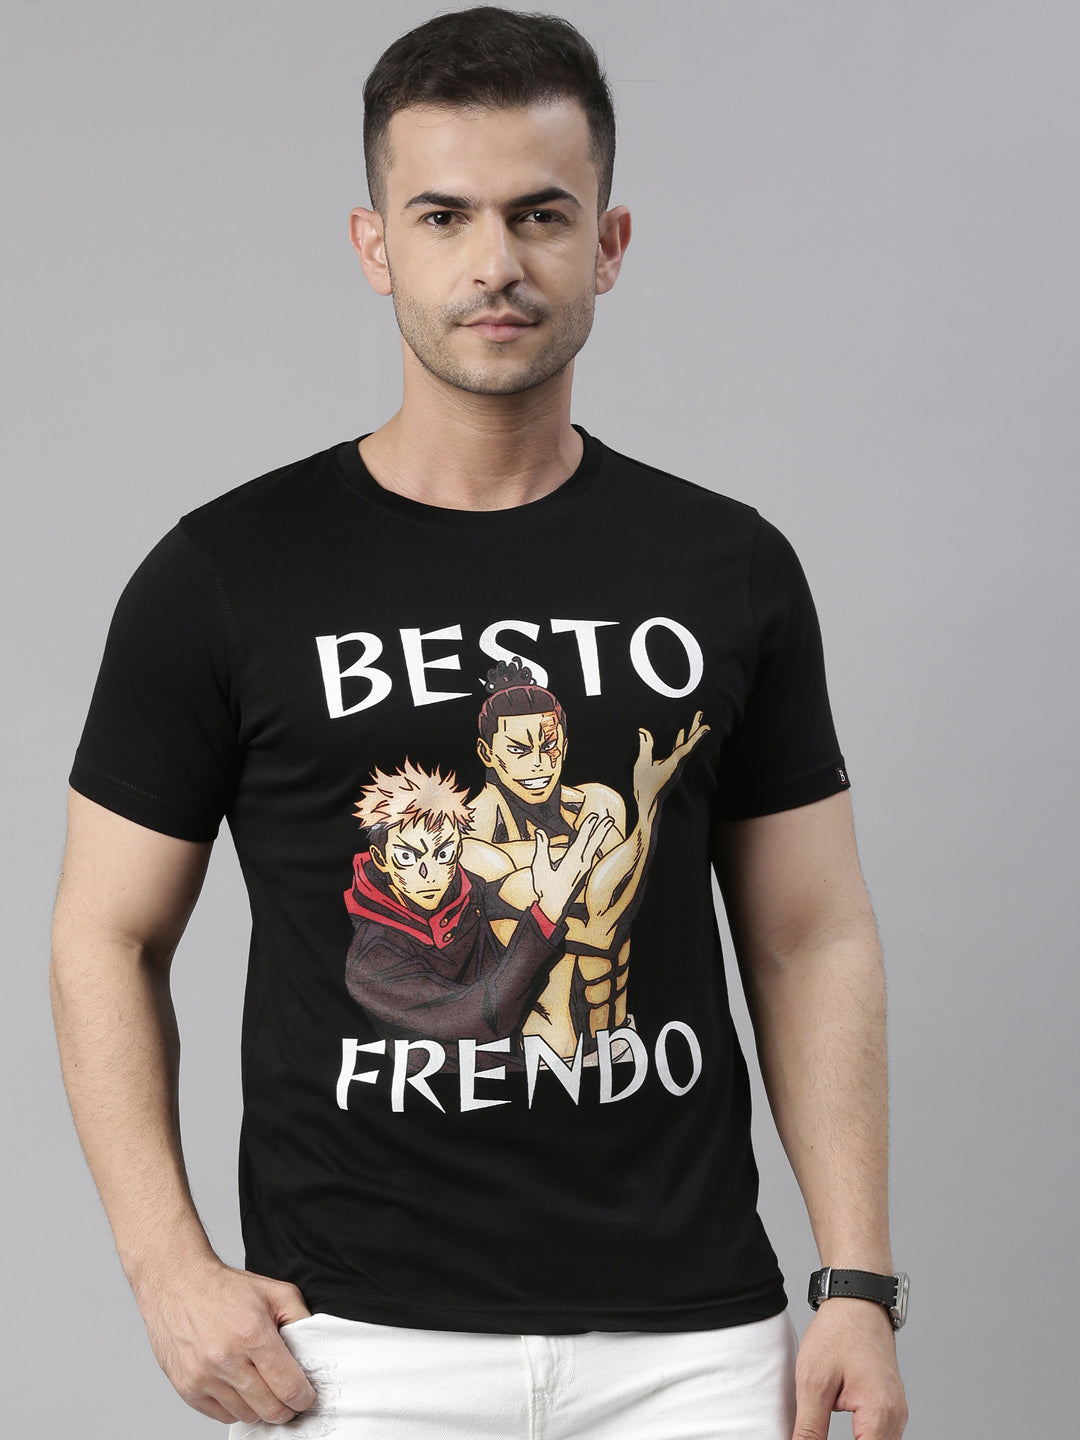 Besto Frendo - Jujutsu Kaisen Anime T-Shirt Graphic T-Shirts Bushirt   